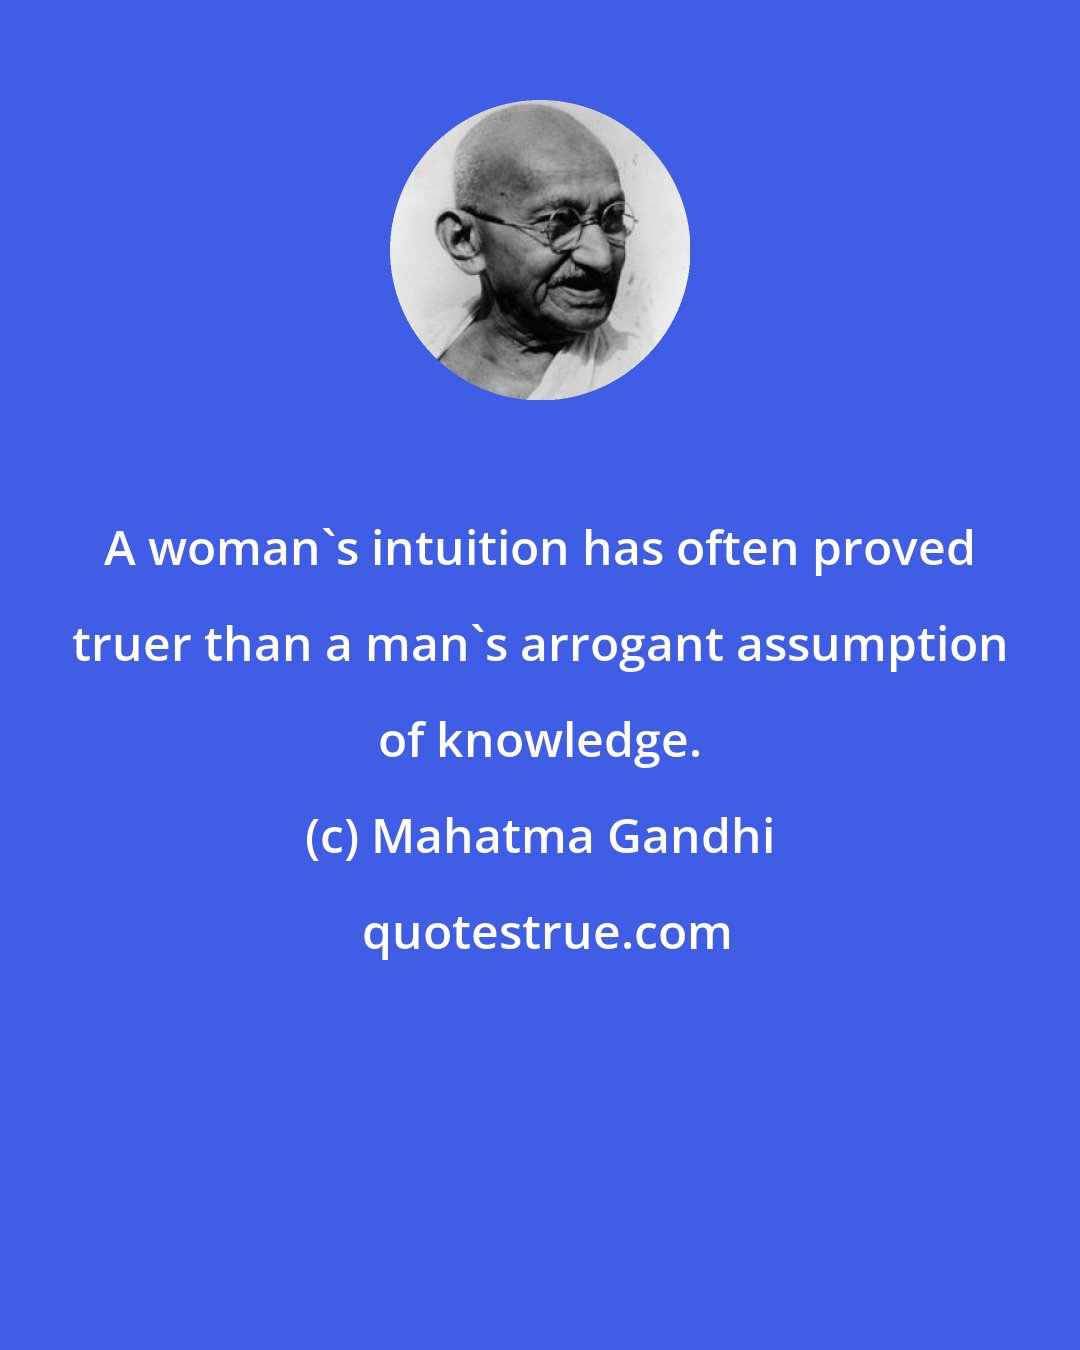 Mahatma Gandhi: A woman's intuition has often proved truer than a man's arrogant assumption of knowledge.